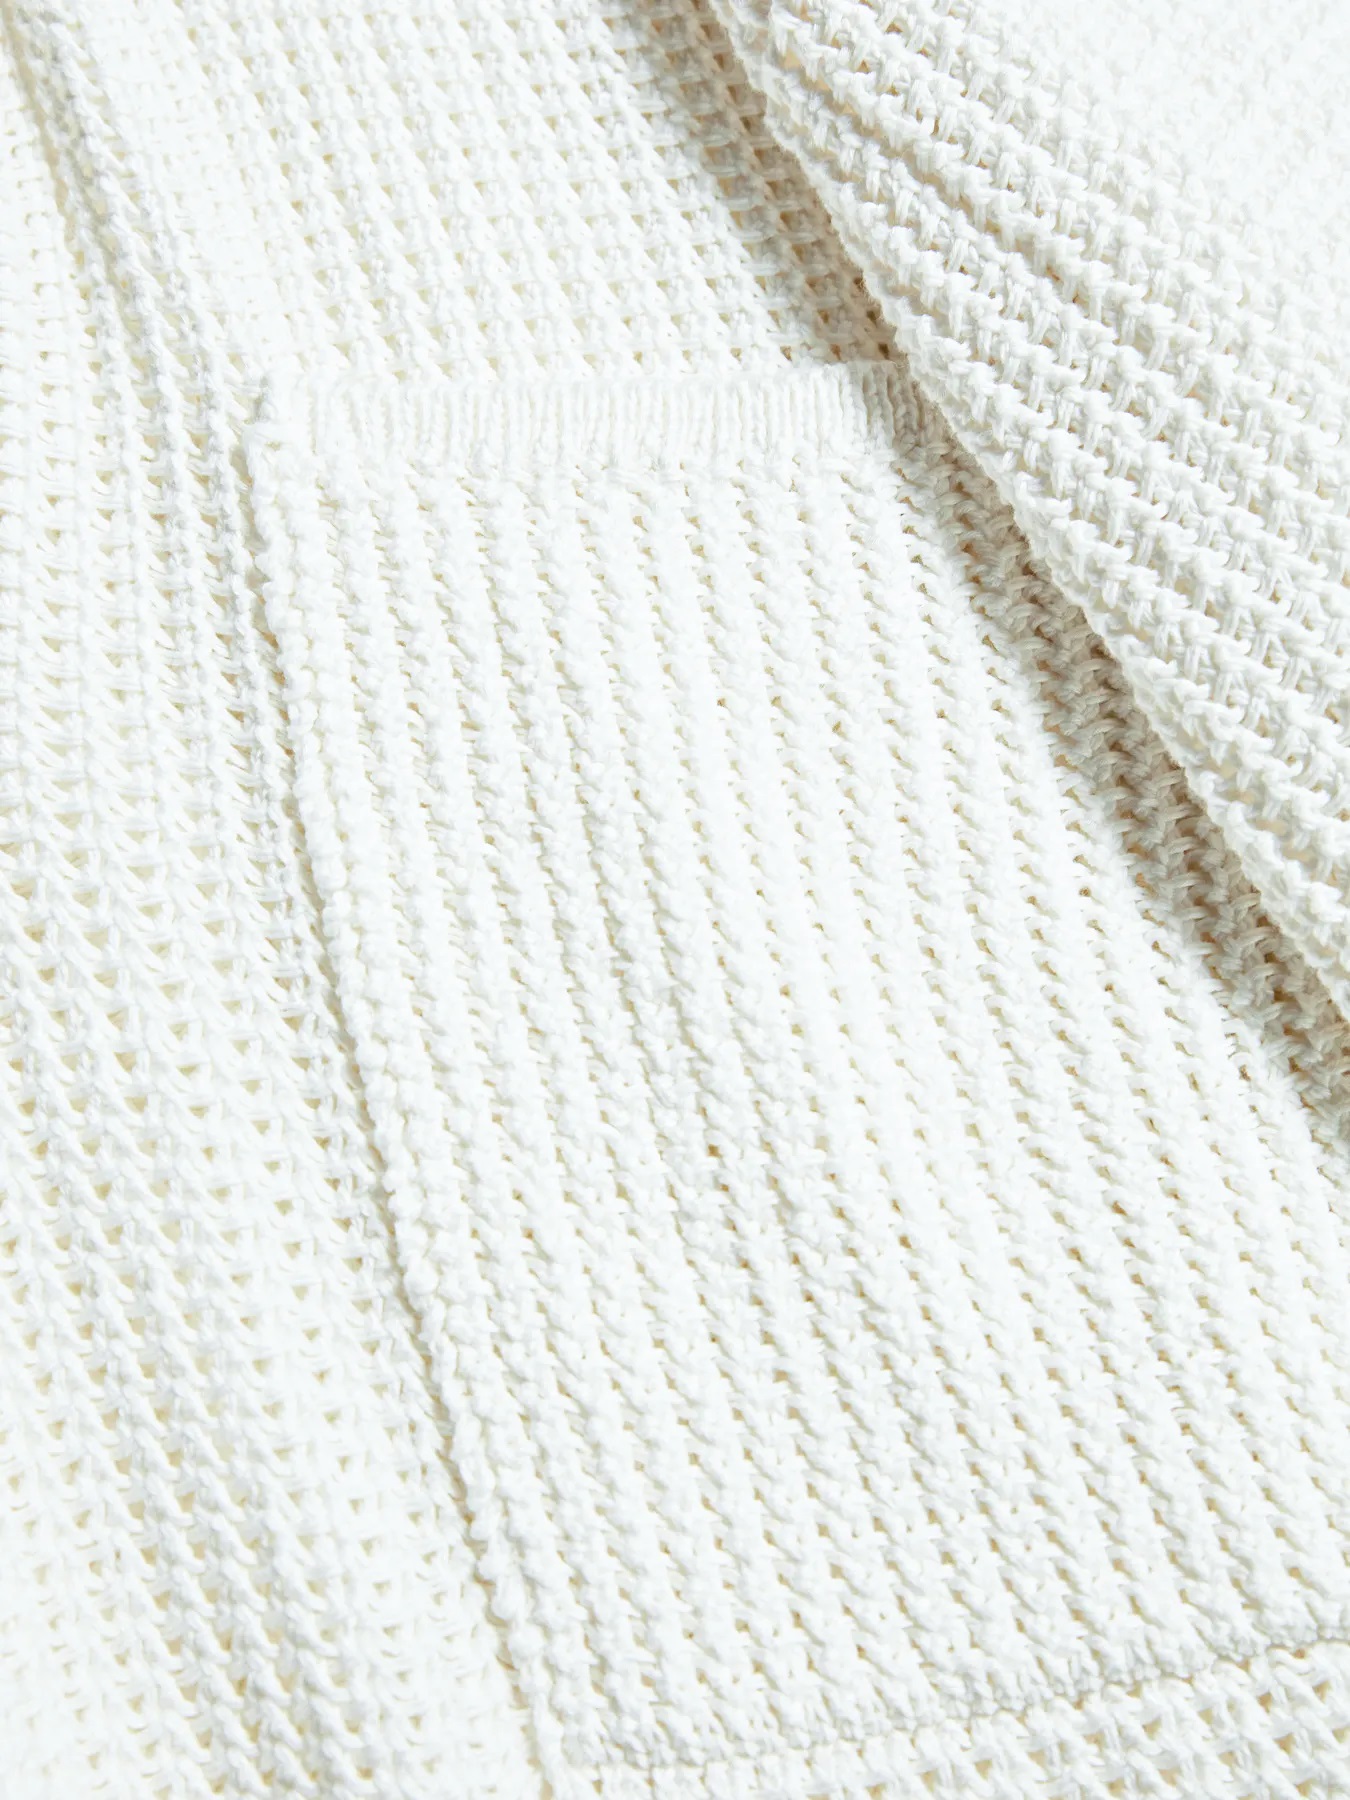 Roberto Collina Oversize Cotton Knit Polo in Off White 48